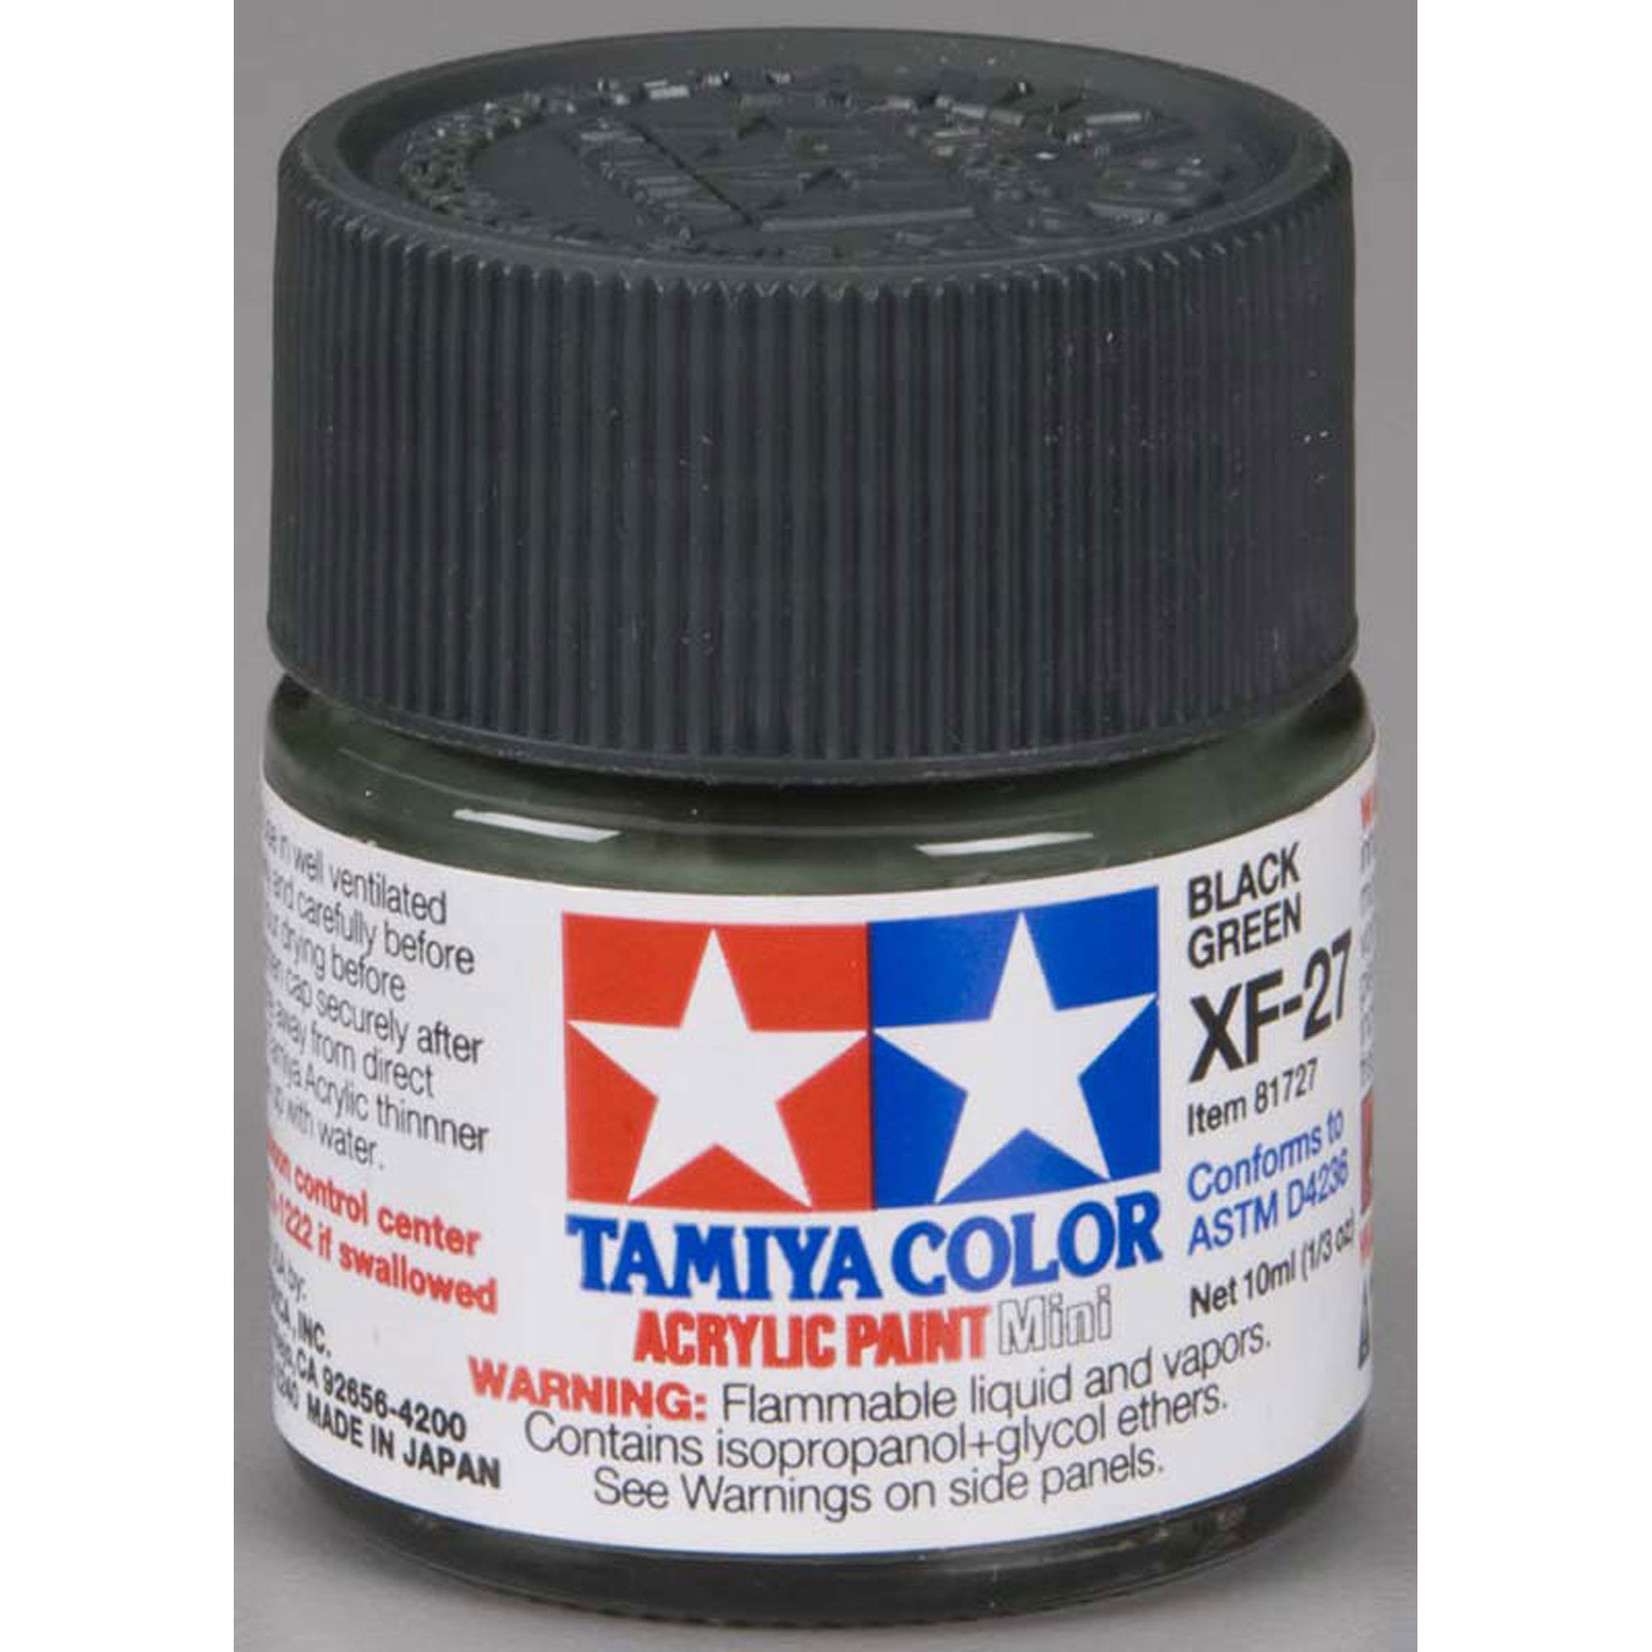 Tamiya Acrylic Mini XF27, Black Green